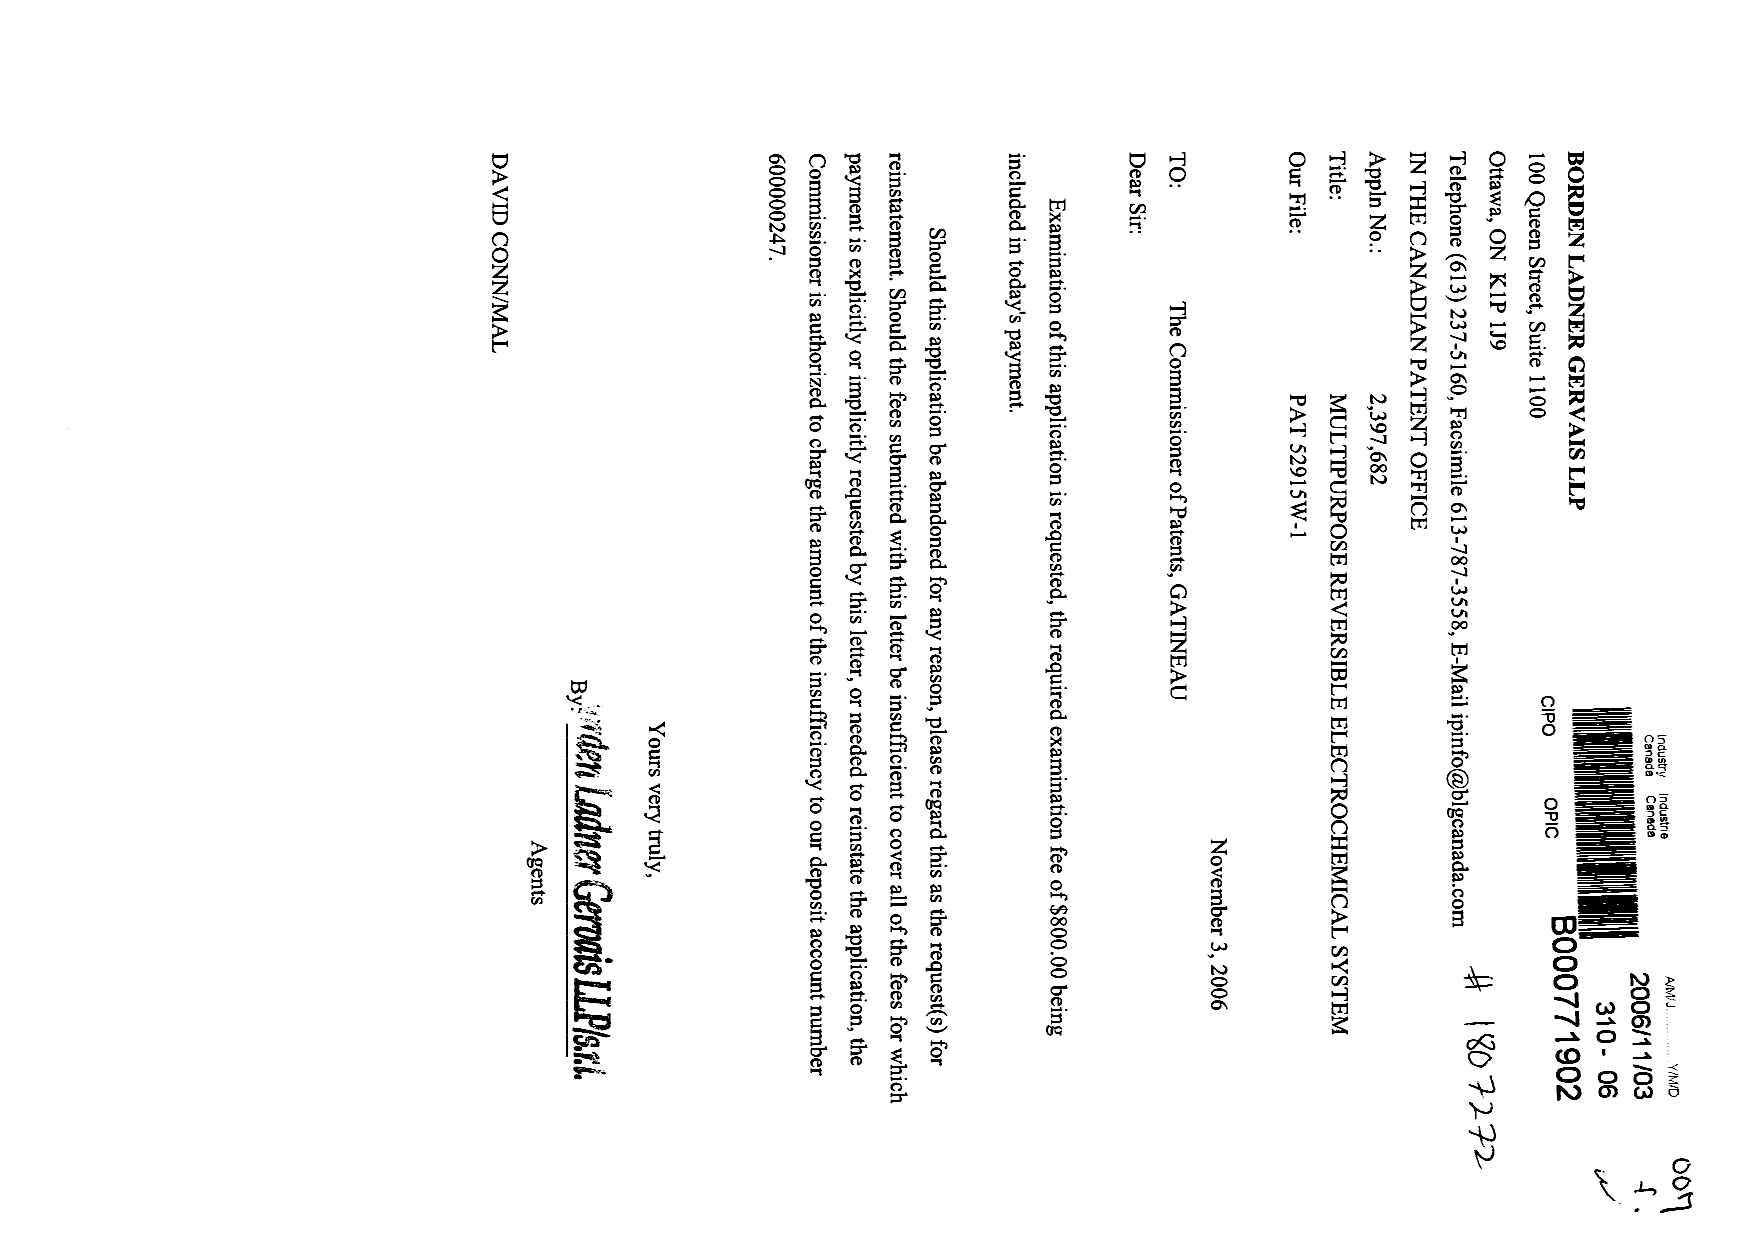 Canadian Patent Document 2397682. Prosecution-Amendment 20061103. Image 1 of 1